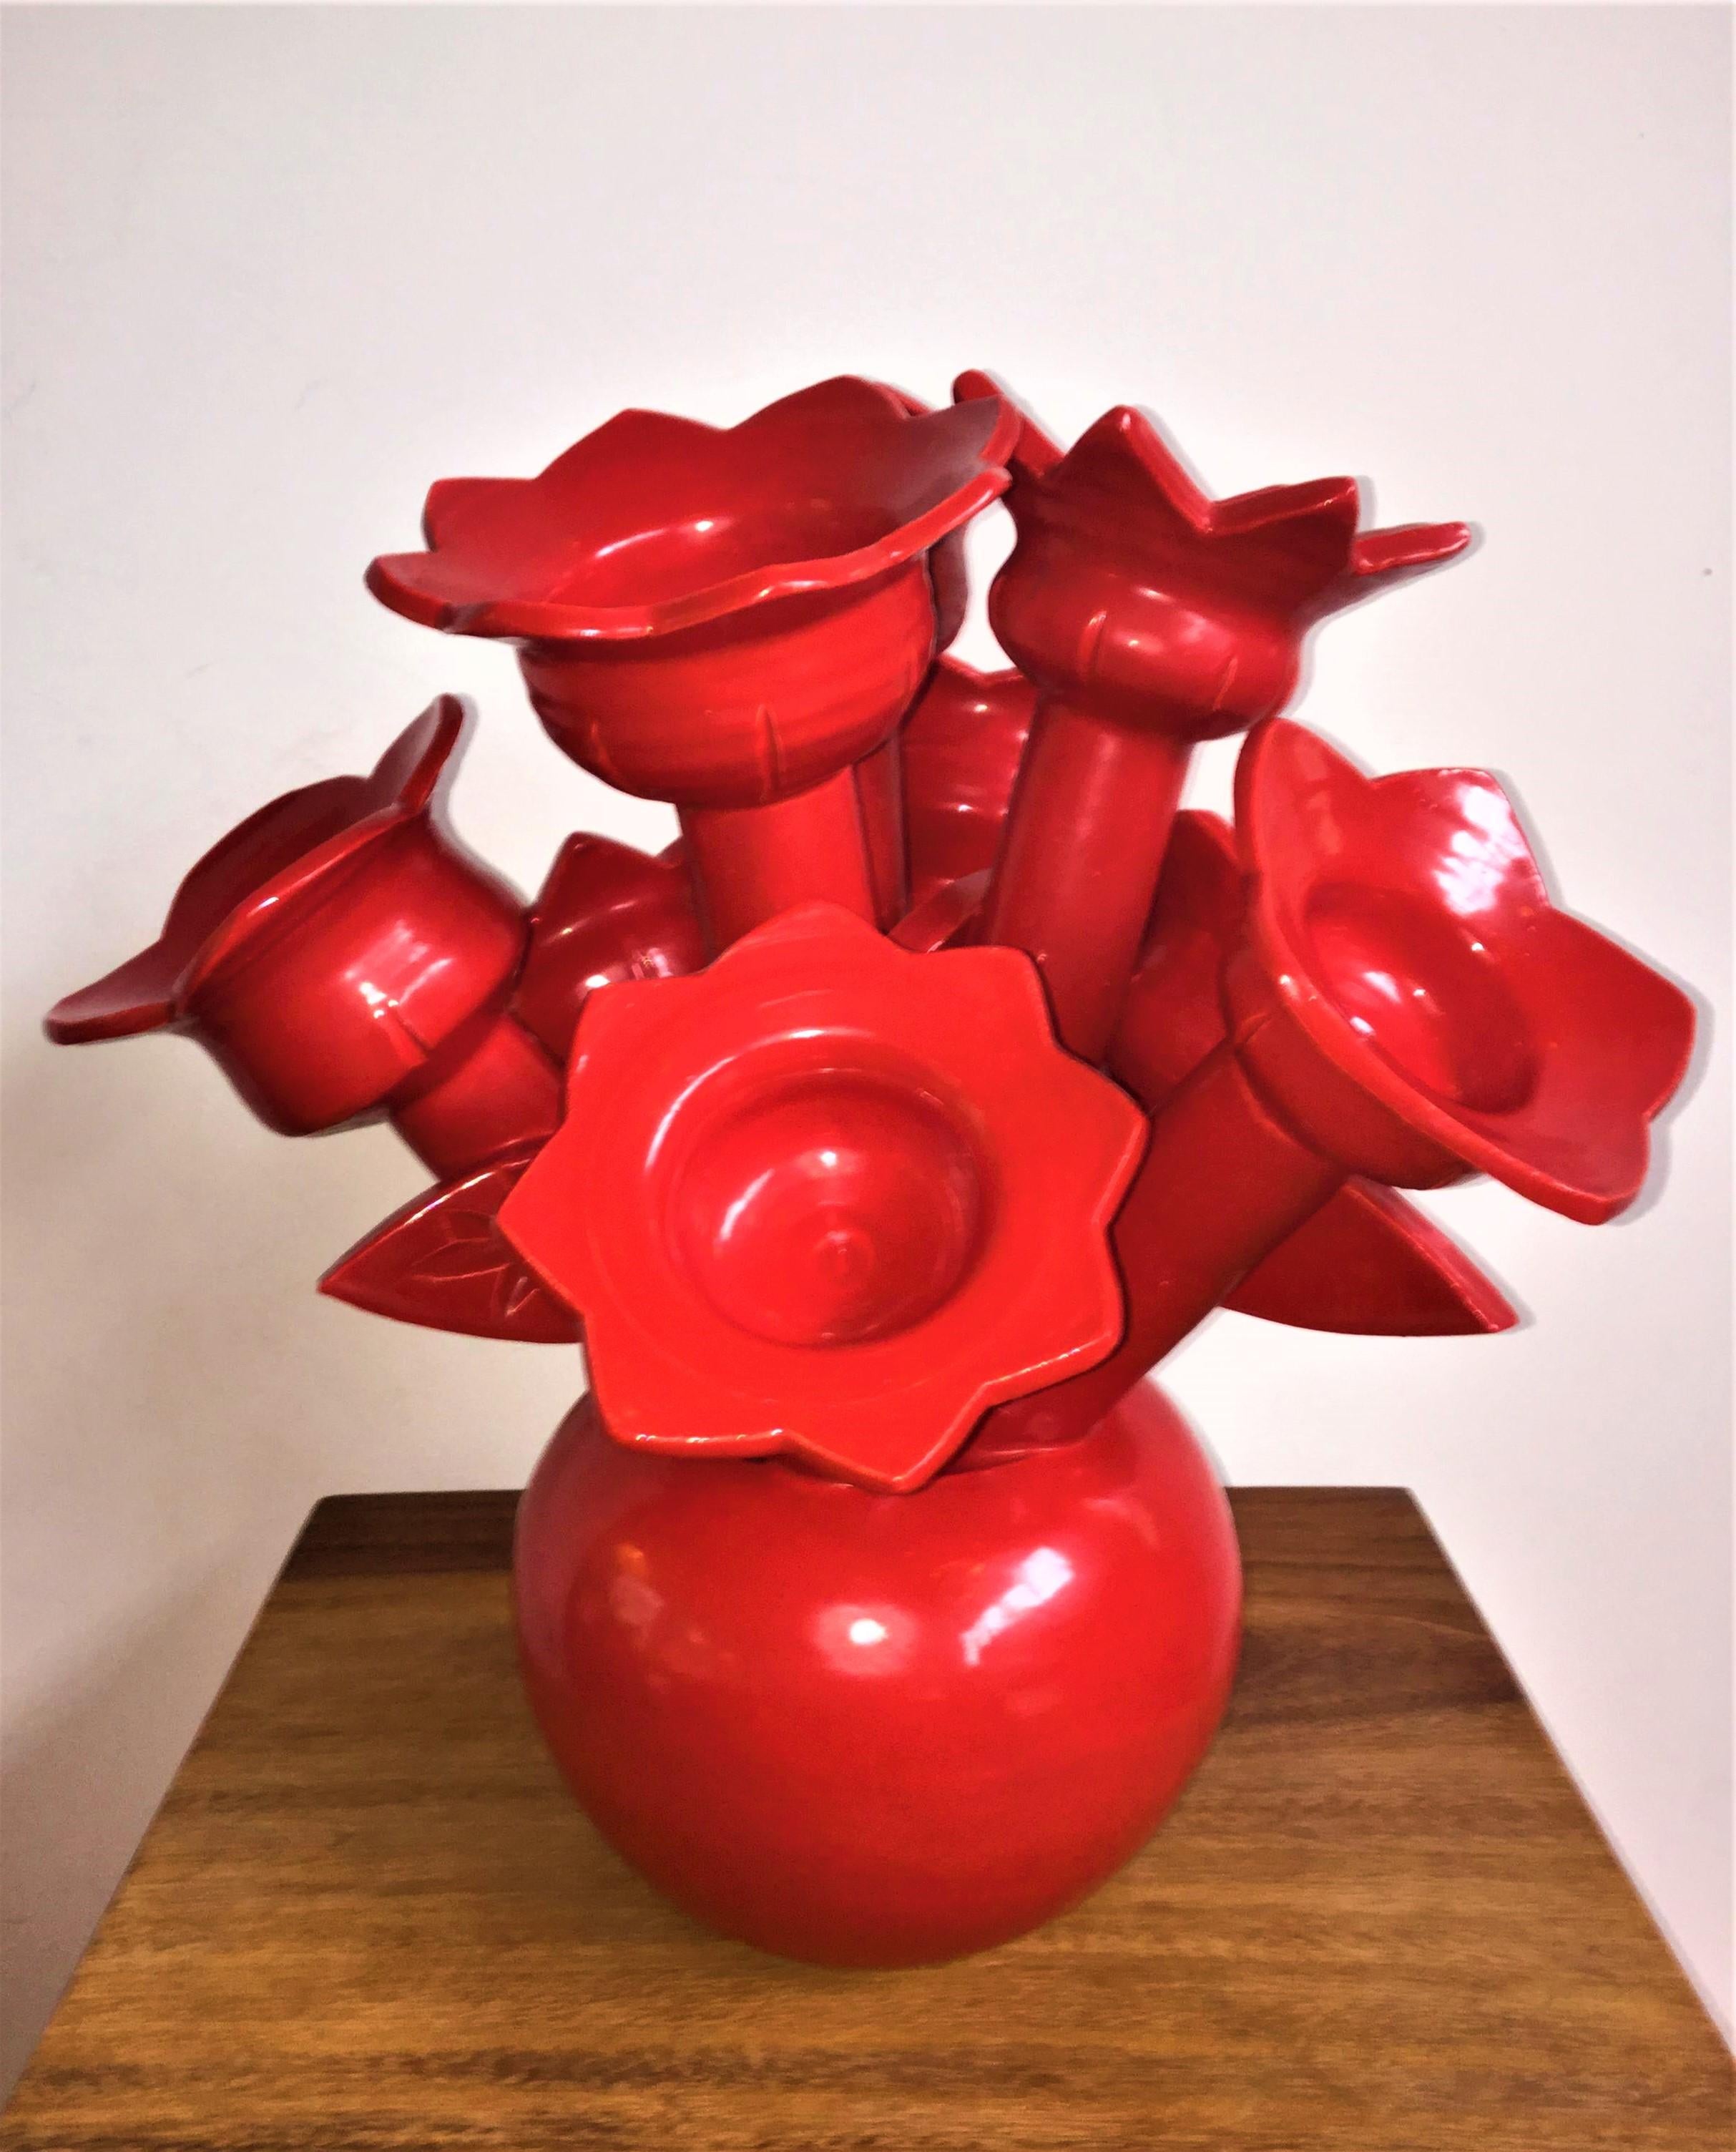 Robert Kvenild Figurative Sculpture - Red Rover